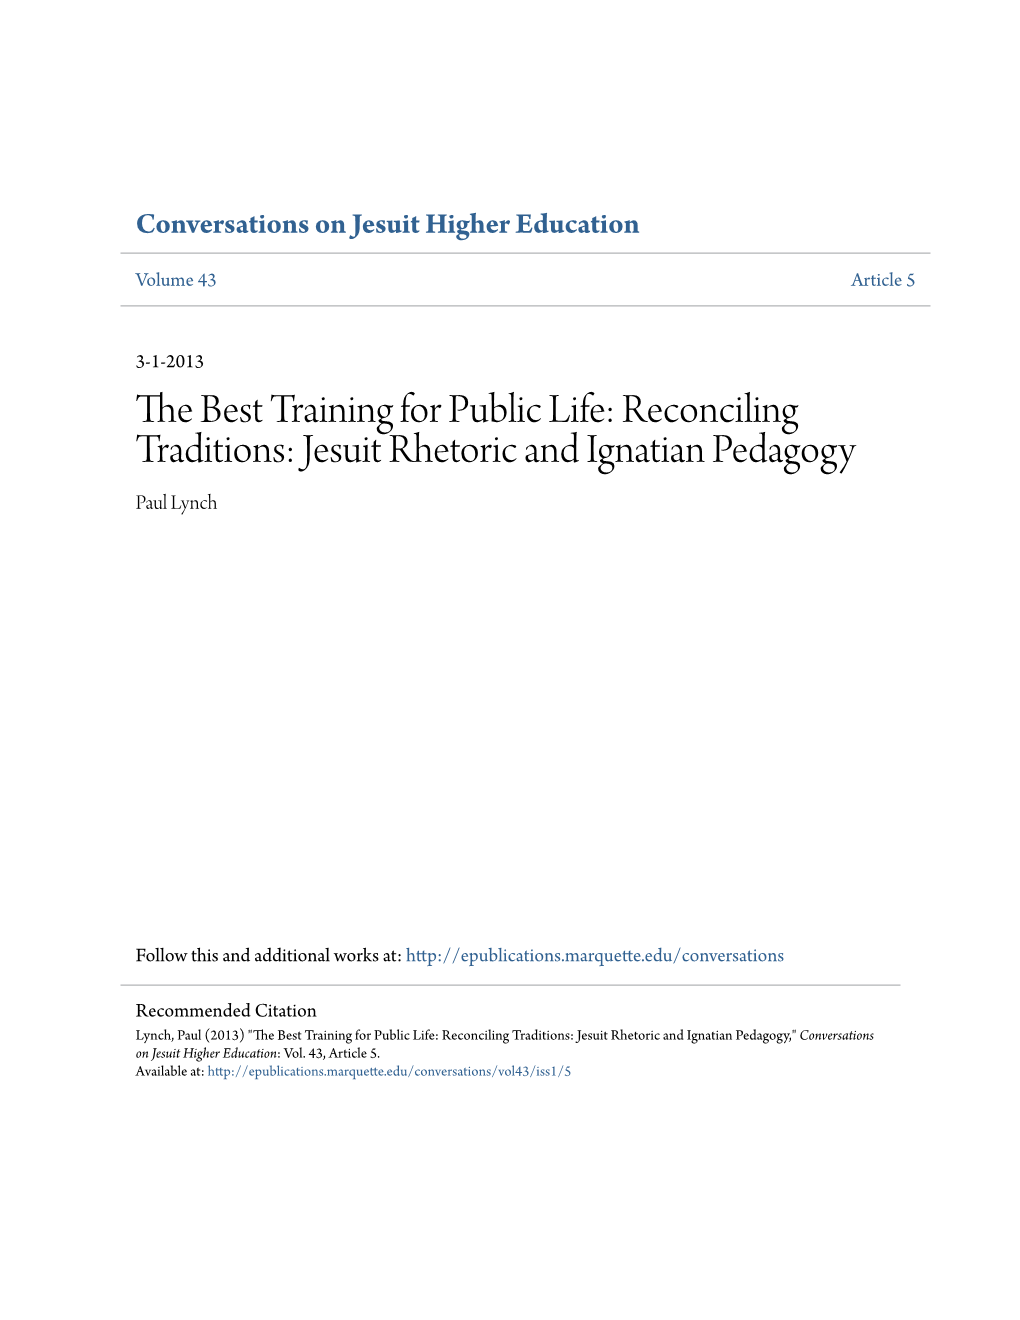 Reconciling Traditions: Jesuit Rhetoric and Ignatian Pedagogy Paul Lynch